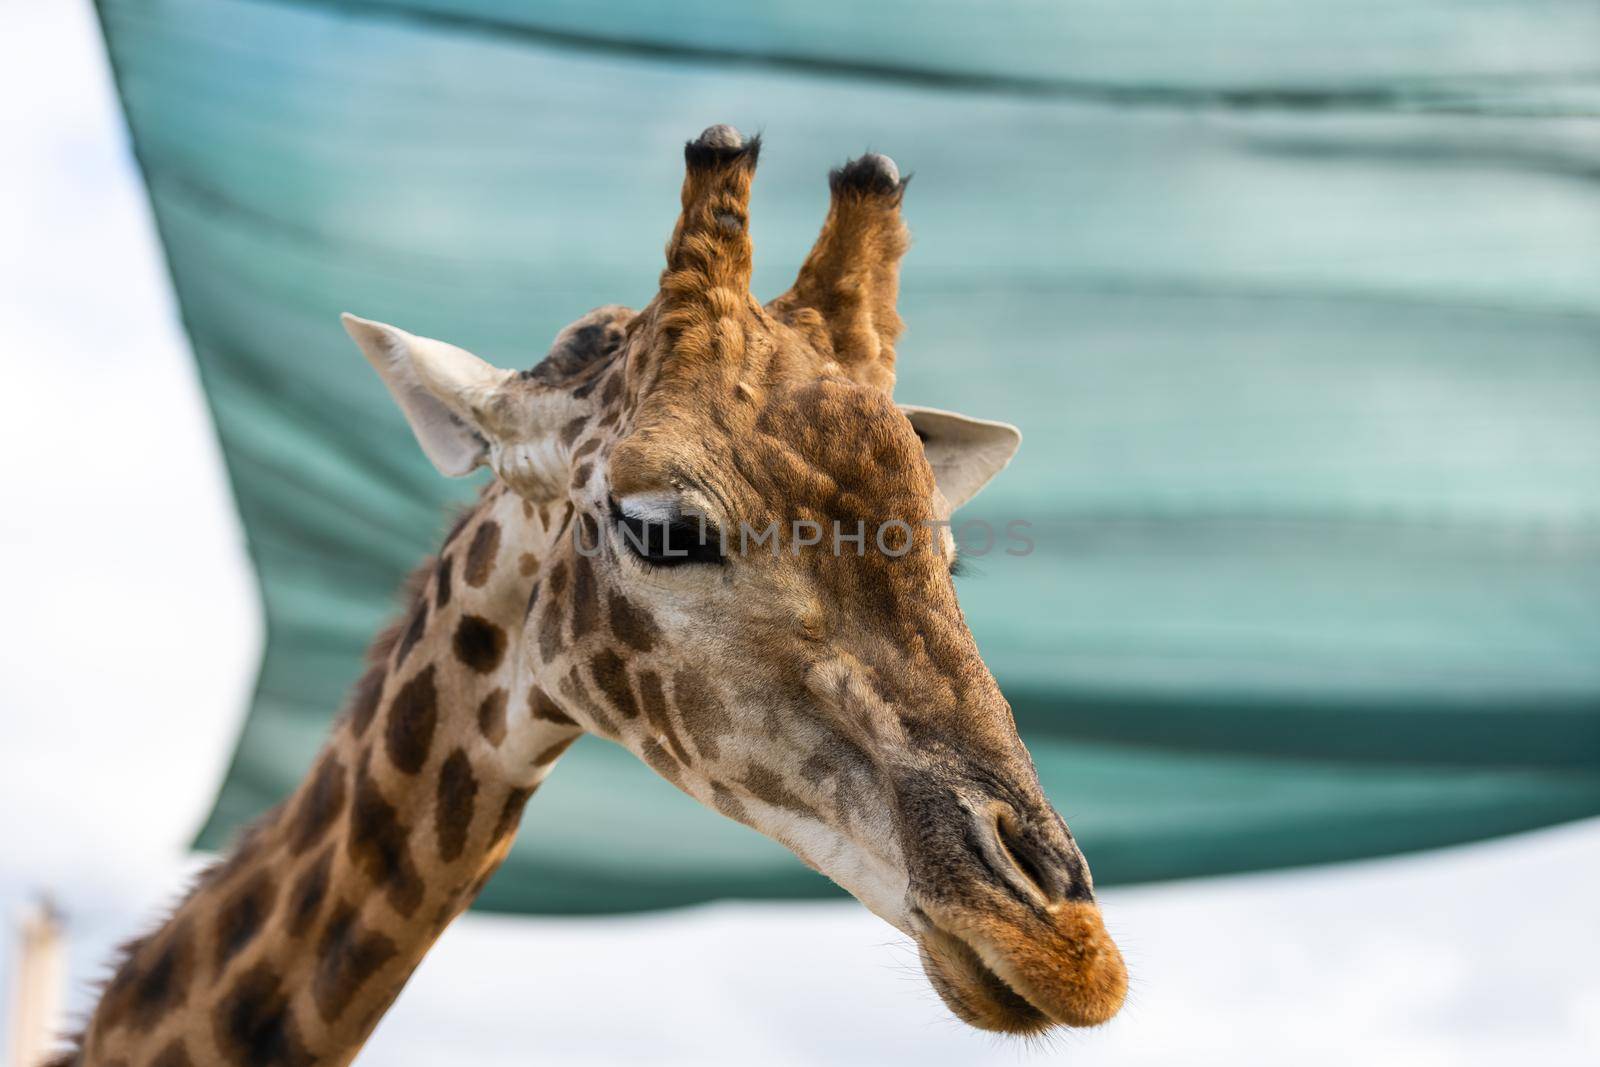 Girl Feeding Giraffe at Zoo by Andelov13